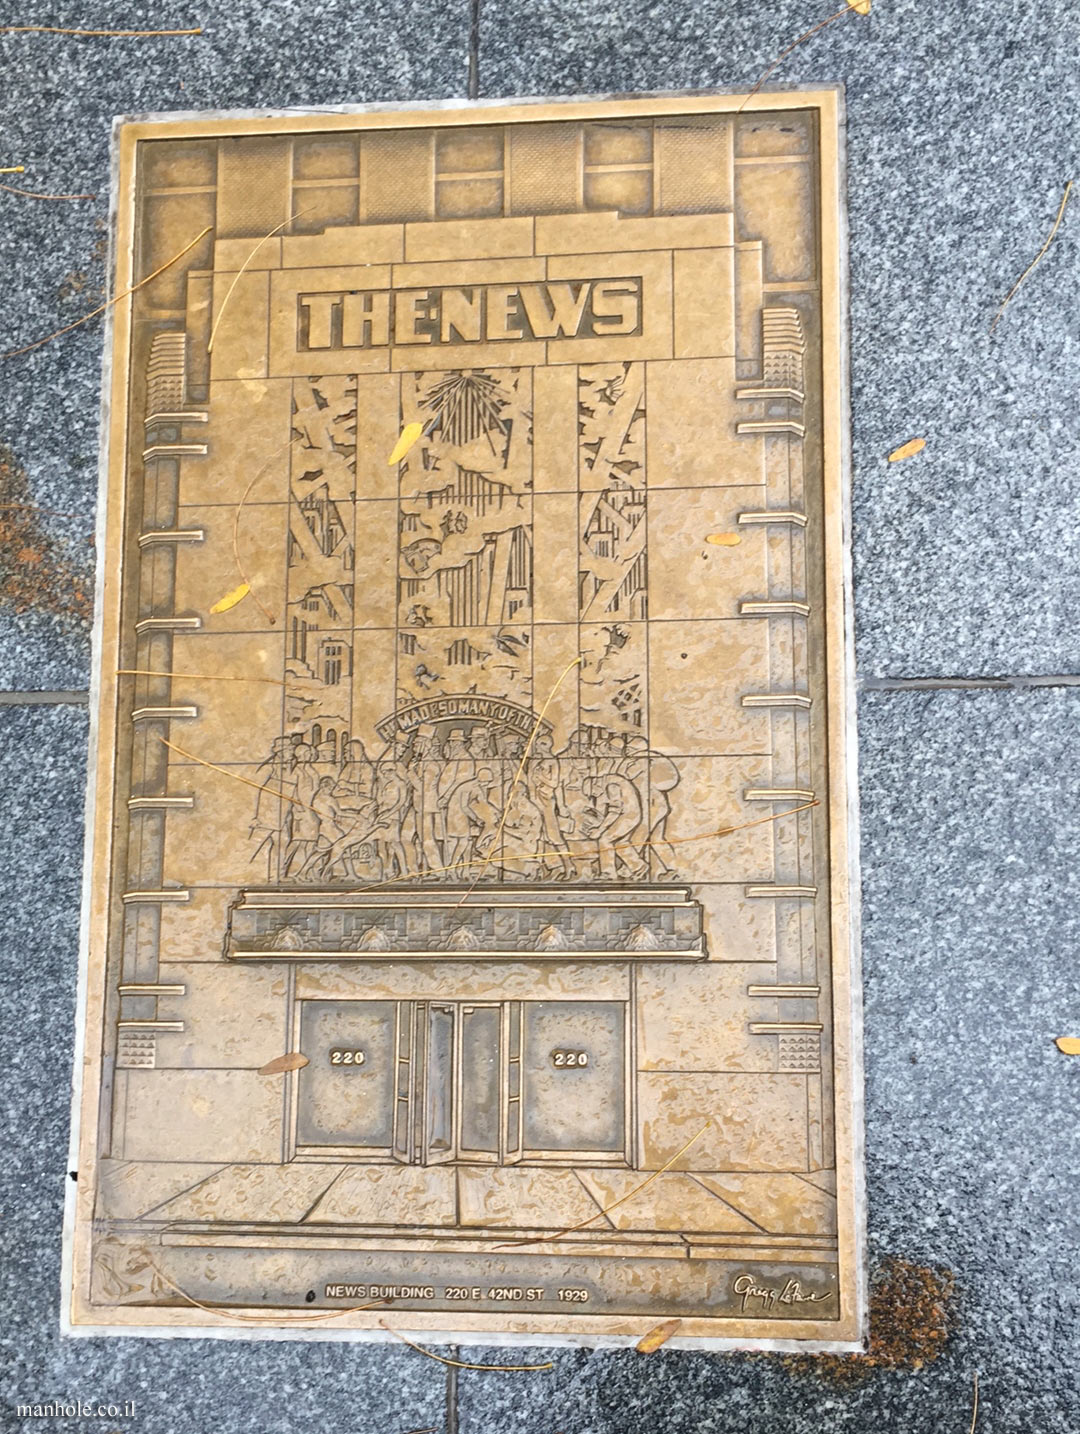 New York - Park Avenue plaques - The News Building